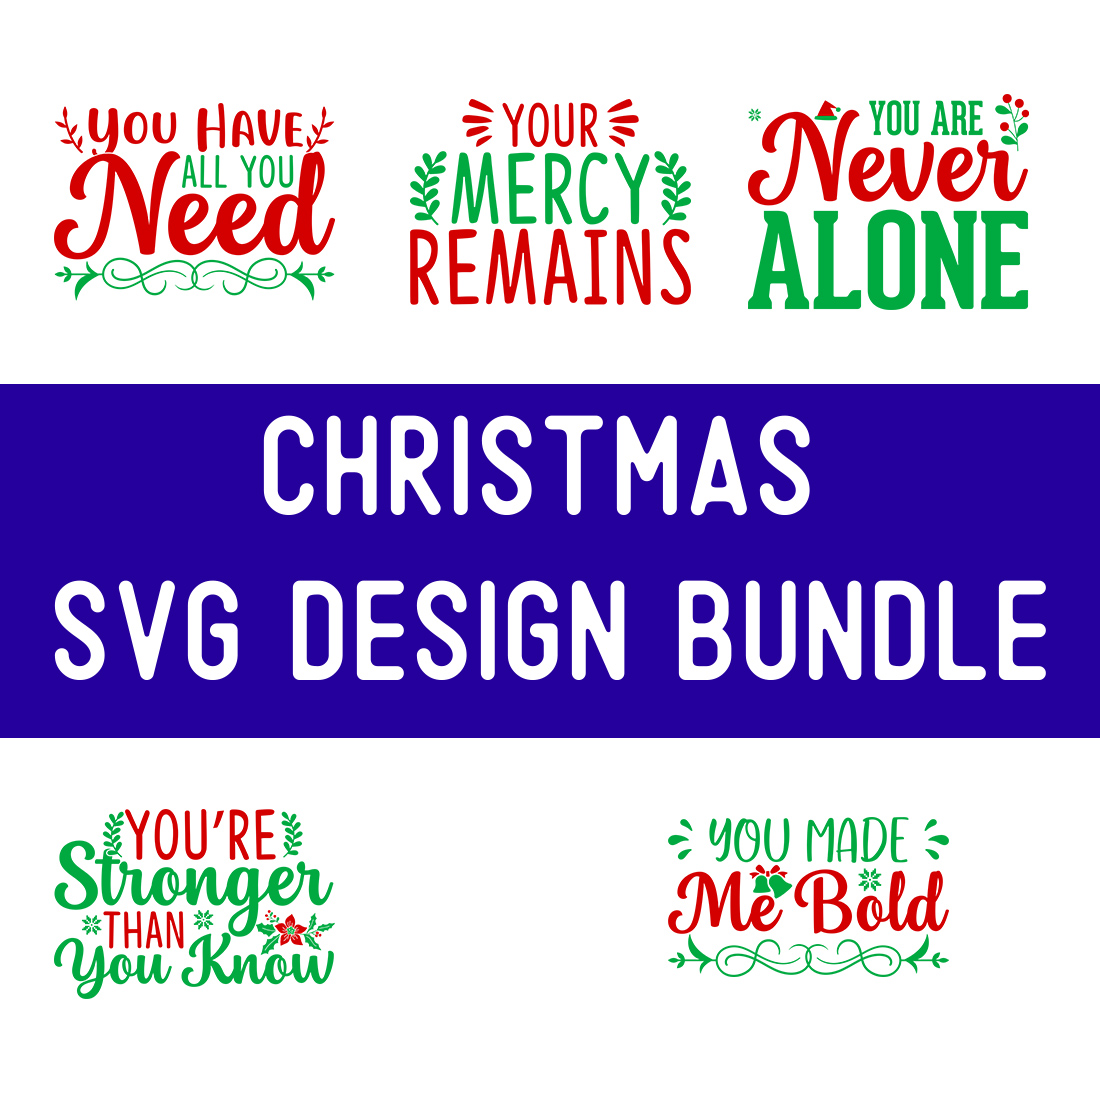 Christmas SVG Design Bundle preview image.